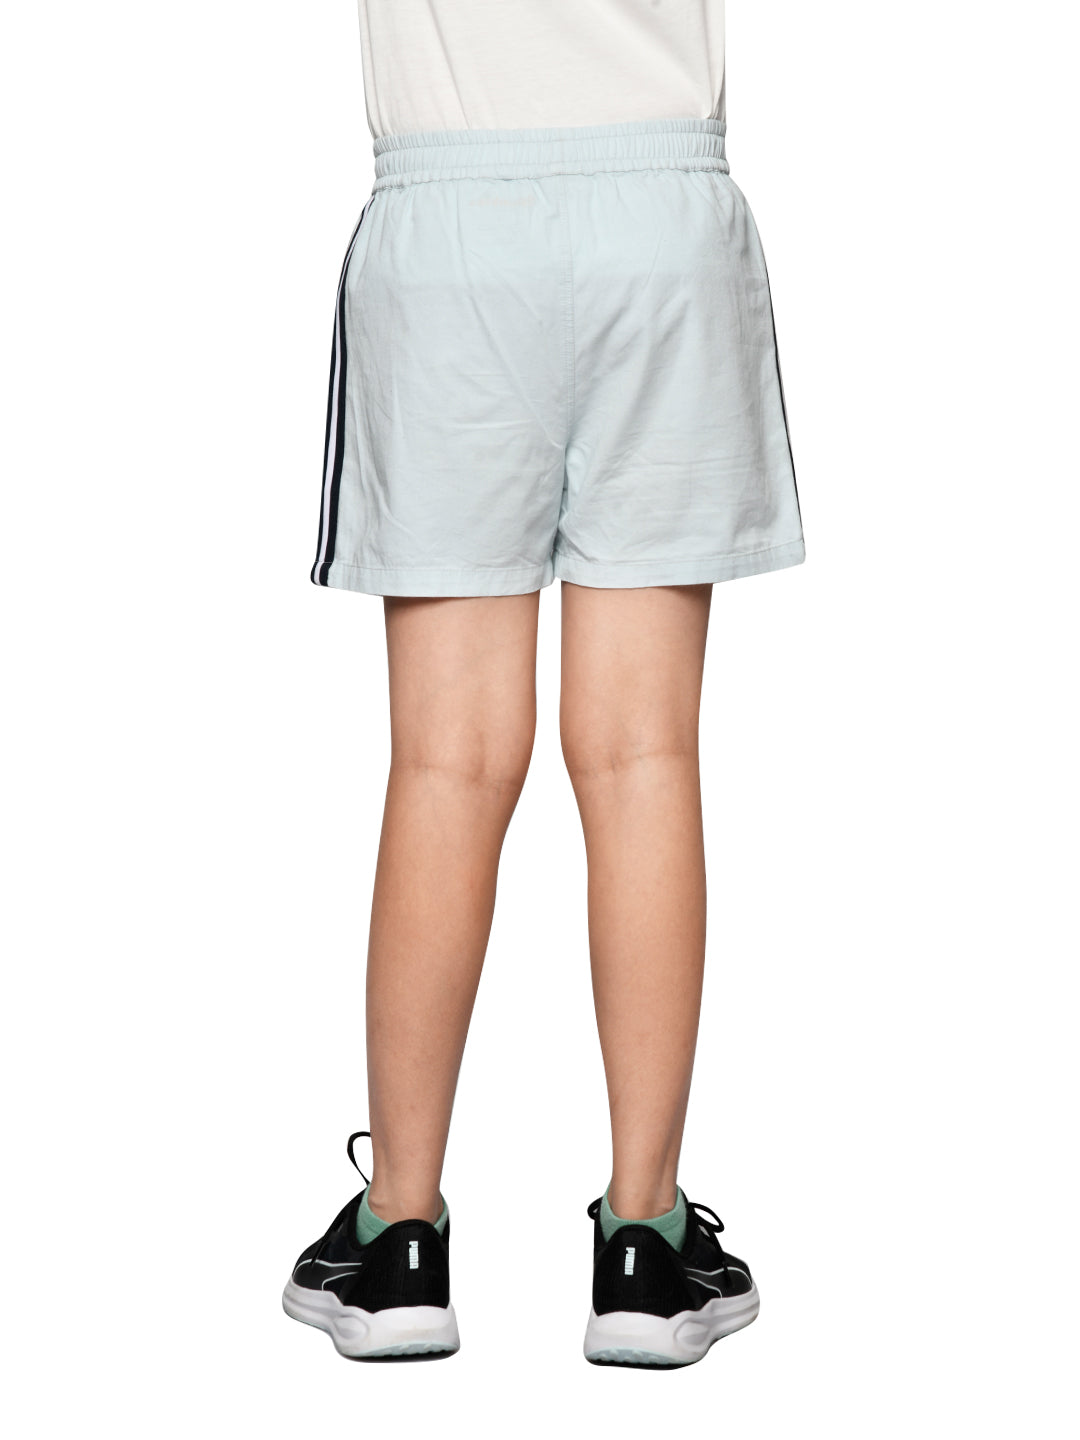 Siesta Shorts For Boys